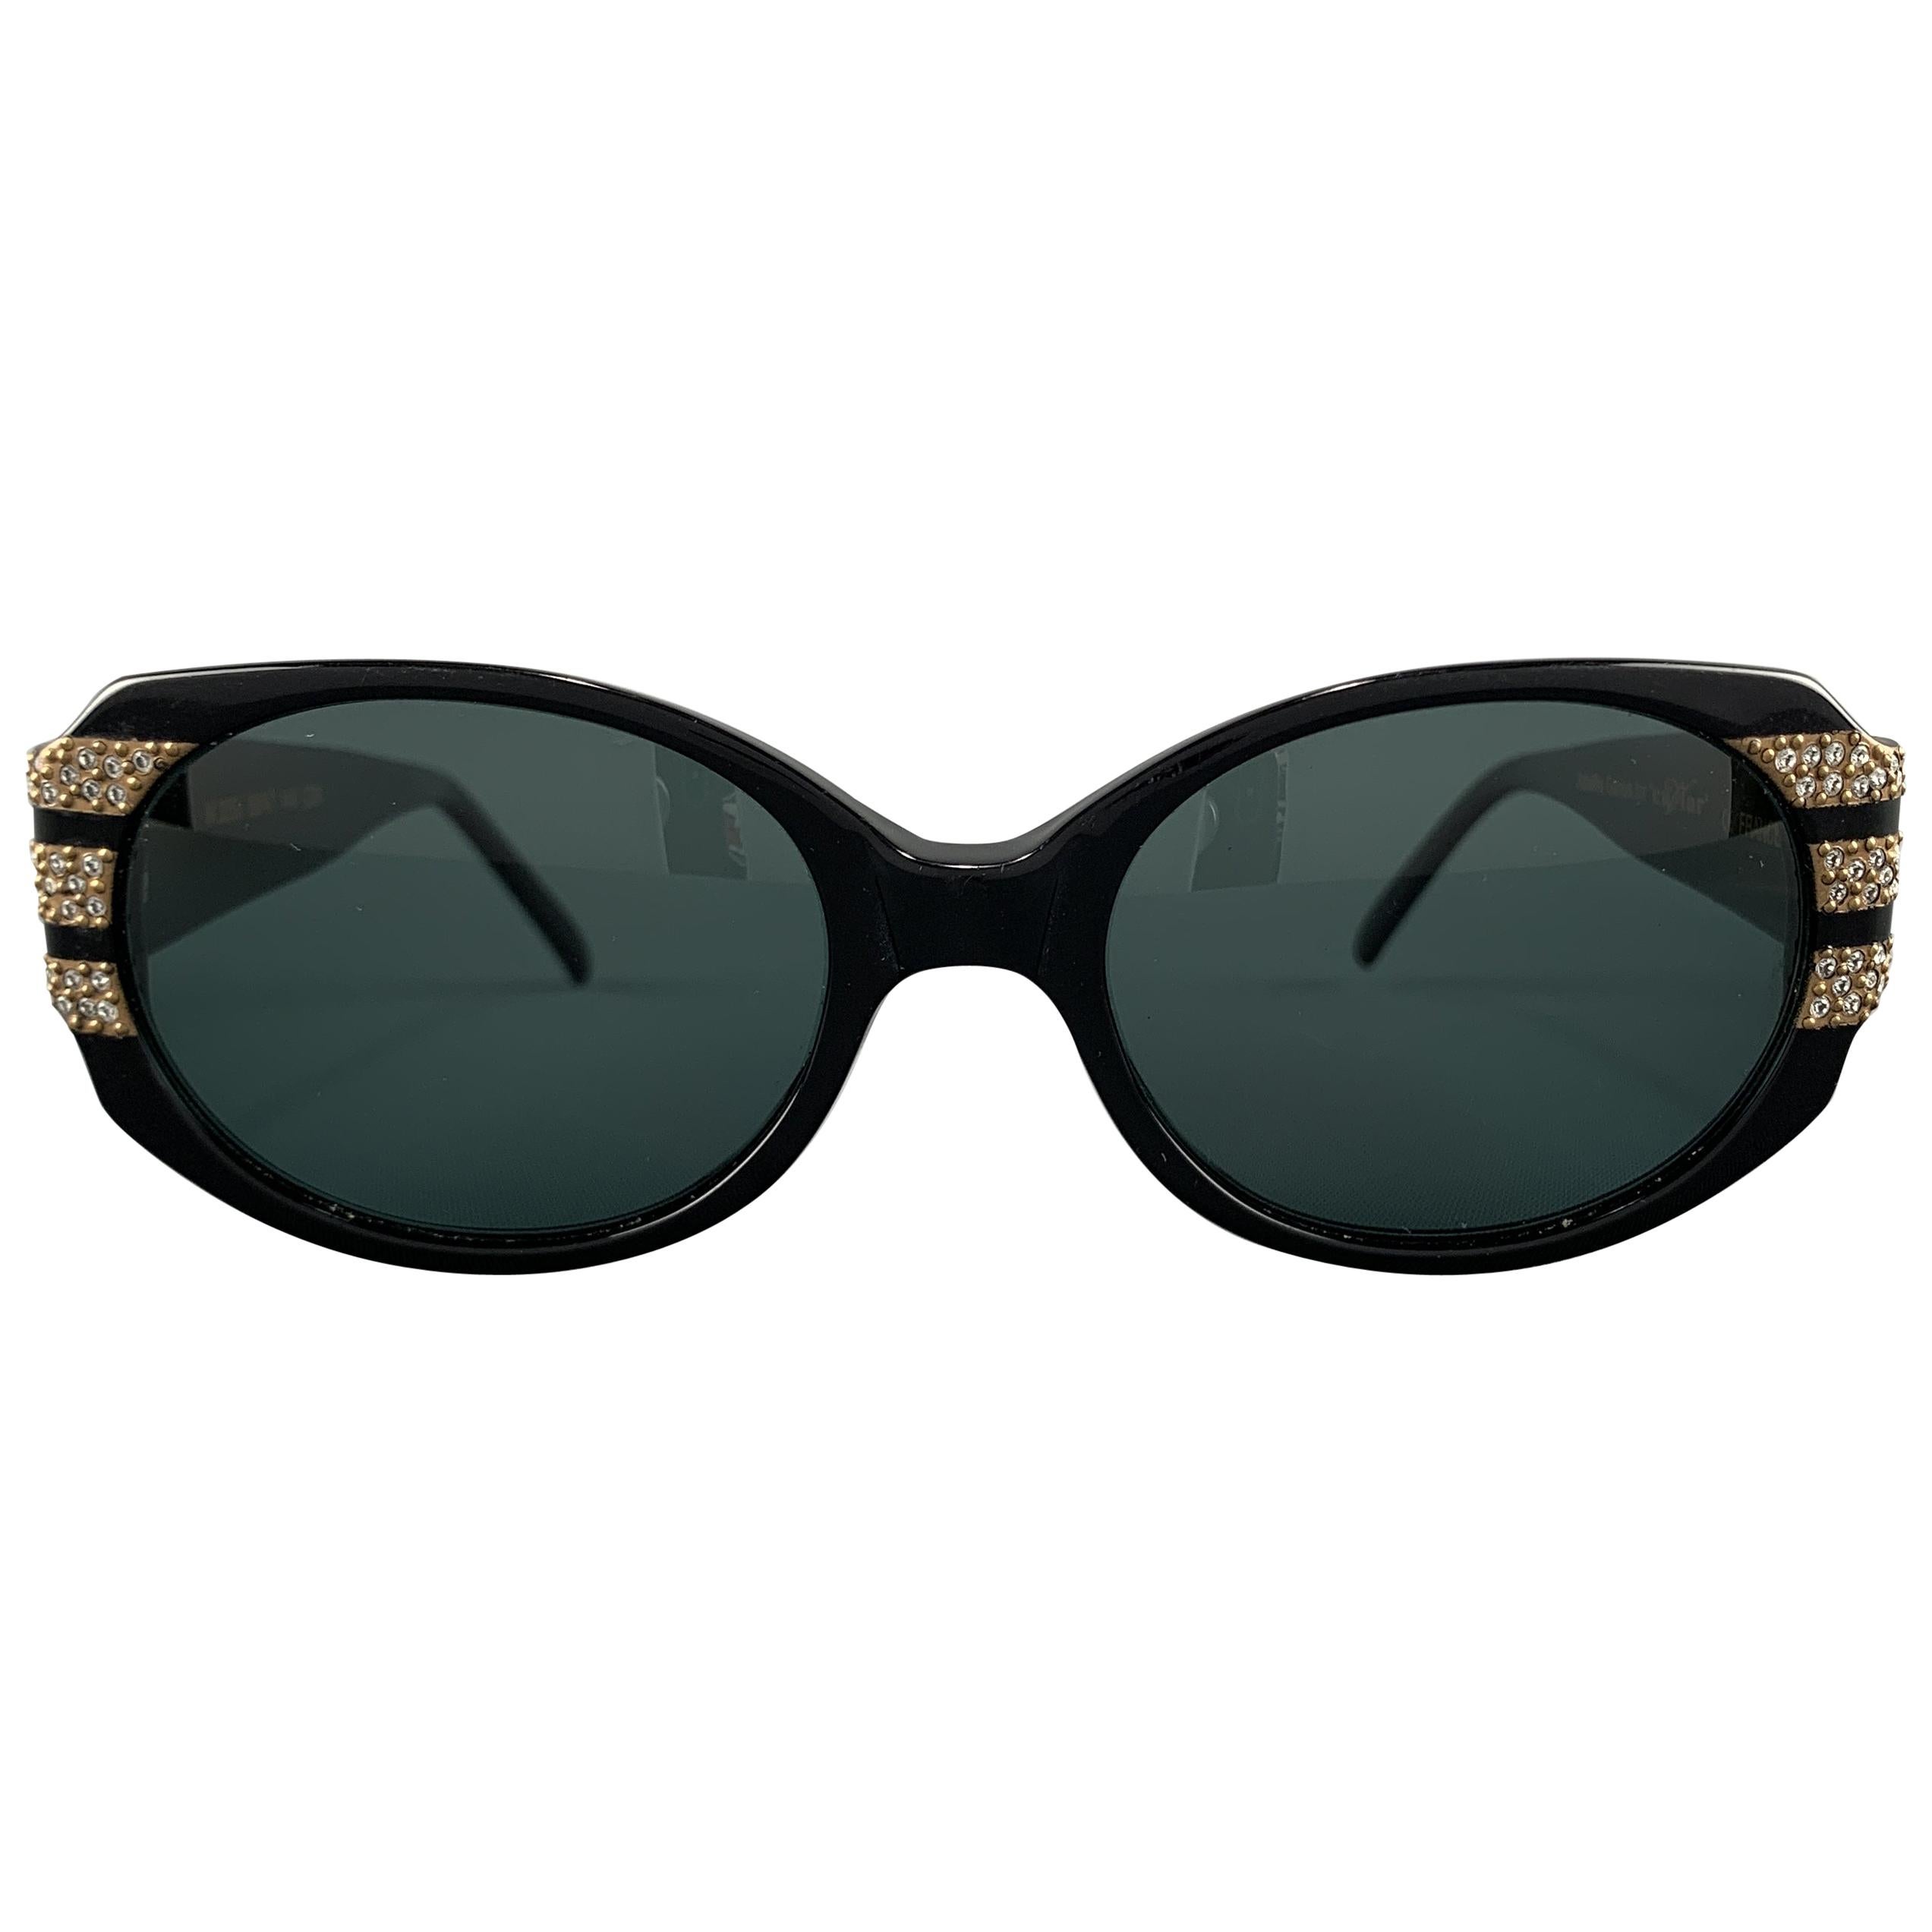 CAVIAR Black & Gold Swarovski Crystal Studded Jubilee Series Sunglasses